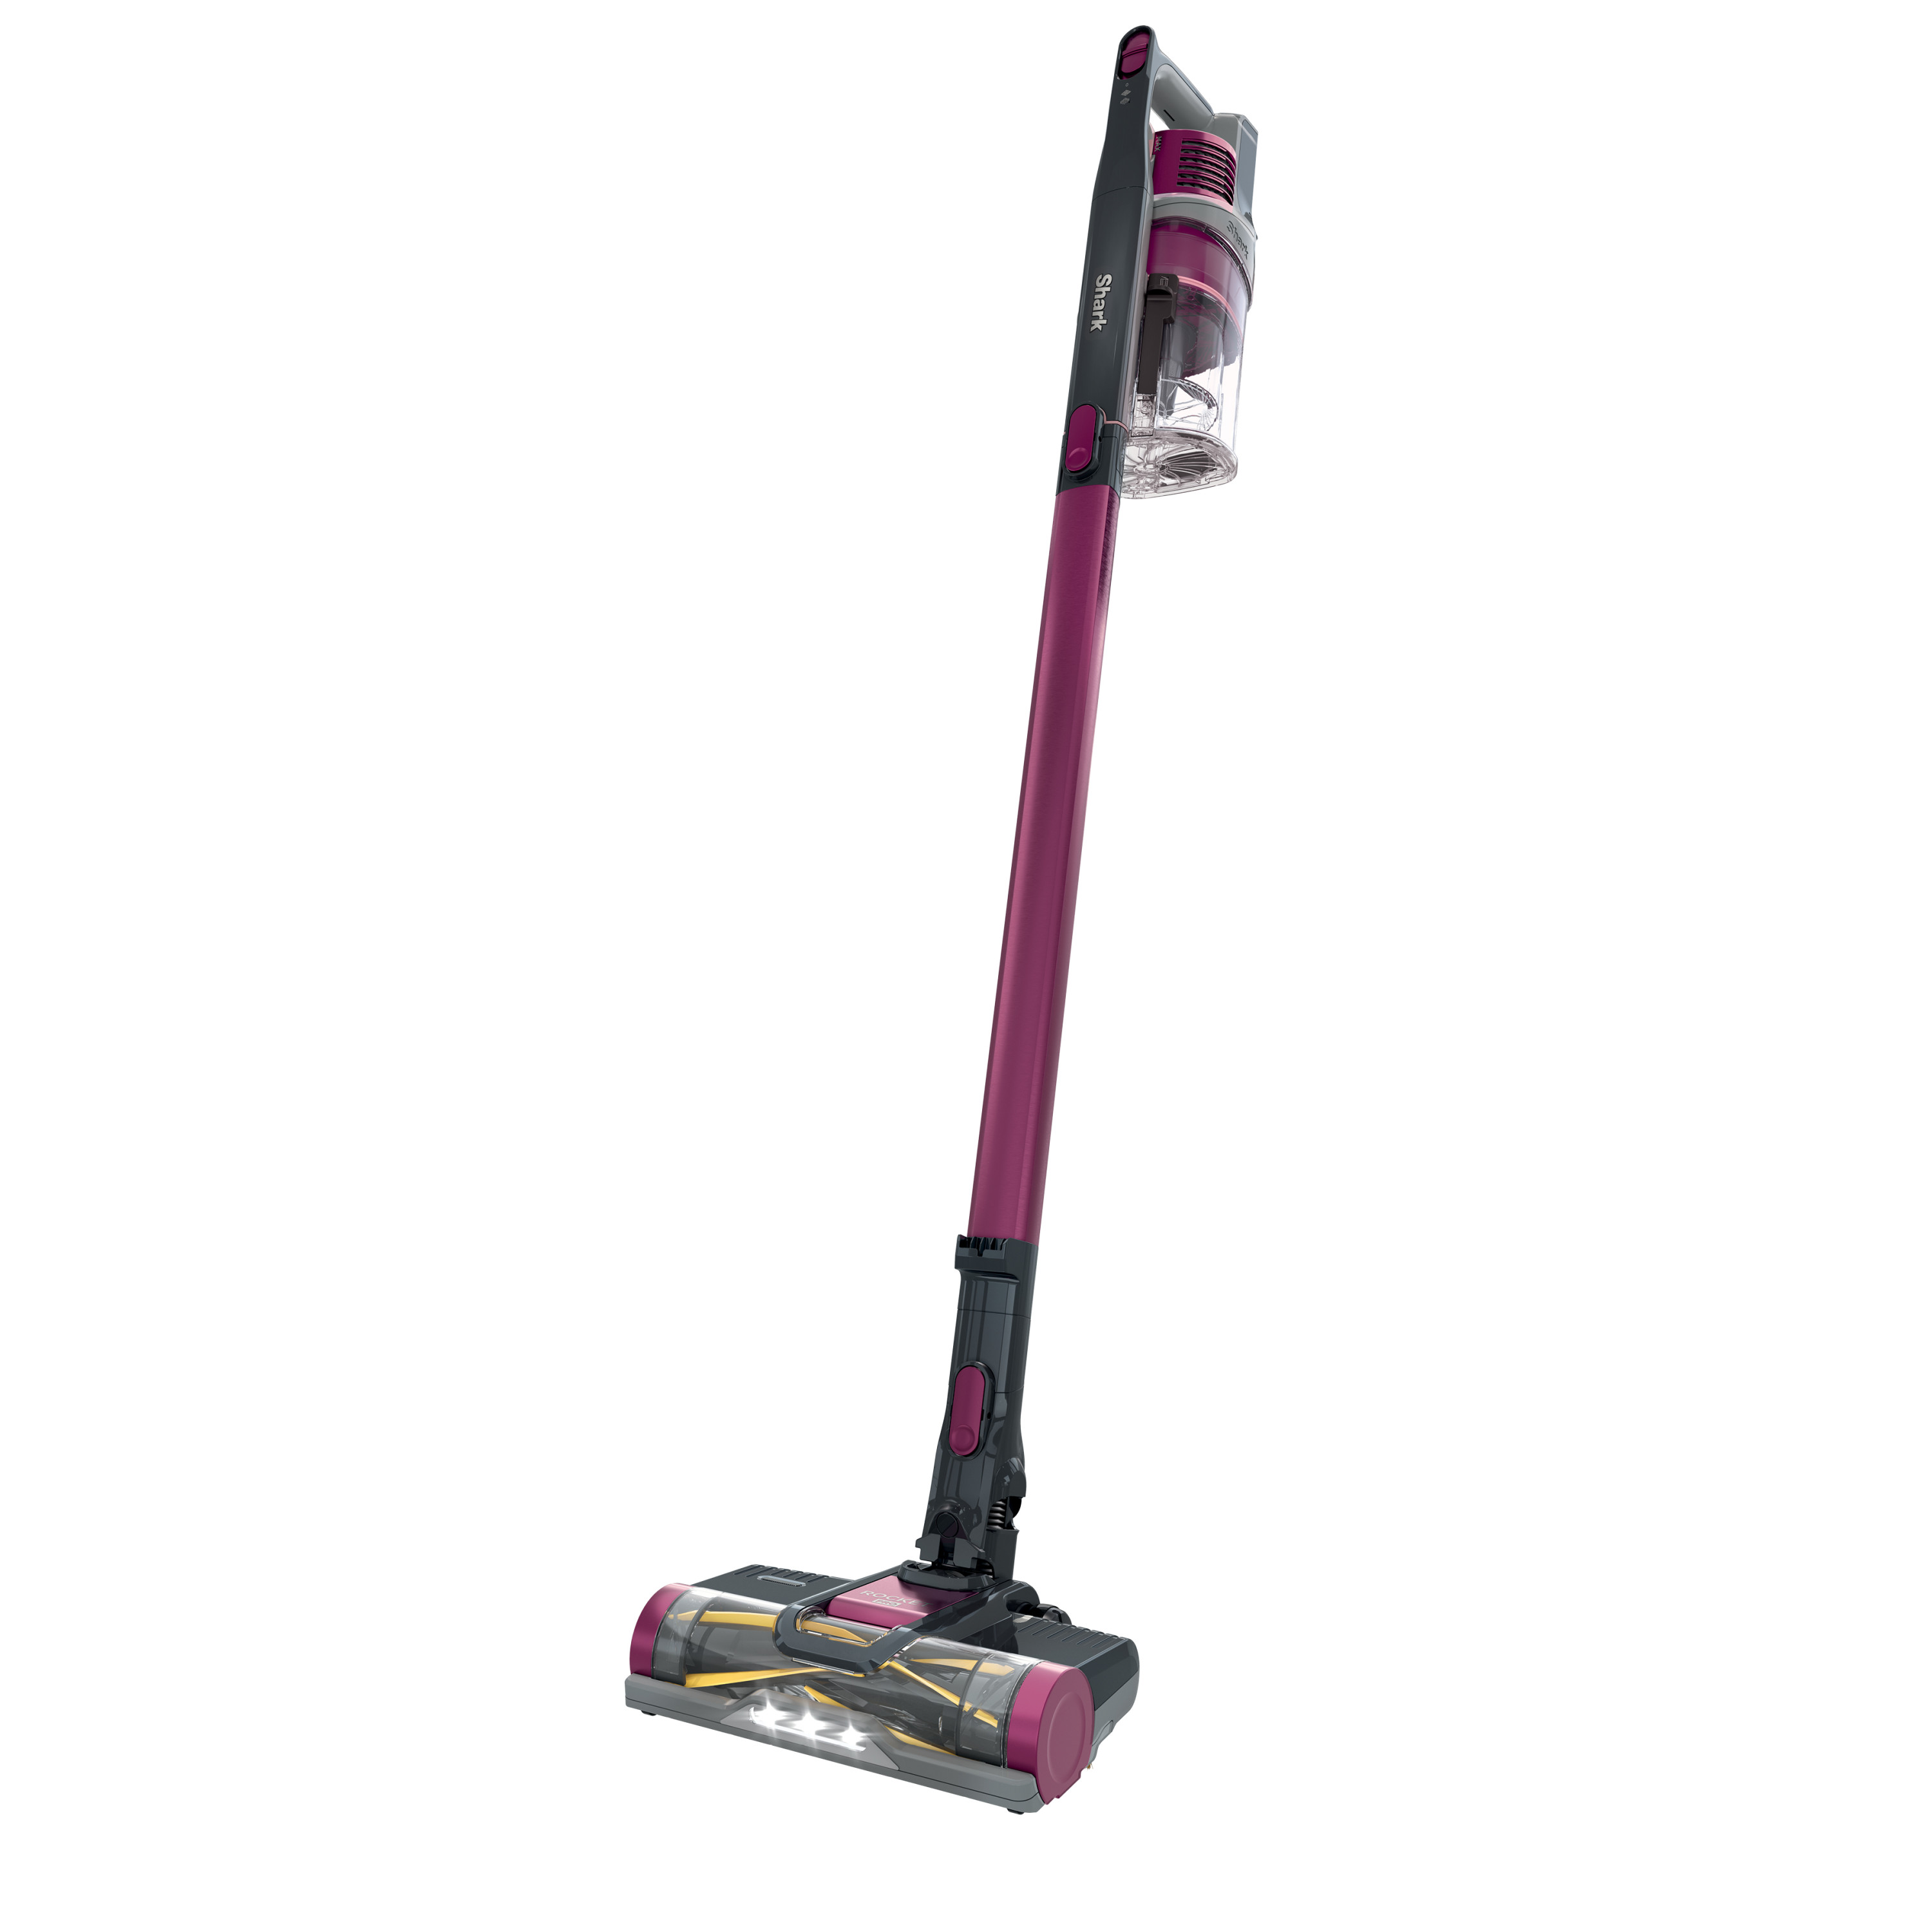 Shark Pet Plus Cordless Stick Vacuum with Self-Cleaning Brushroll and Powerfins, IZ162H - image 1 of 15